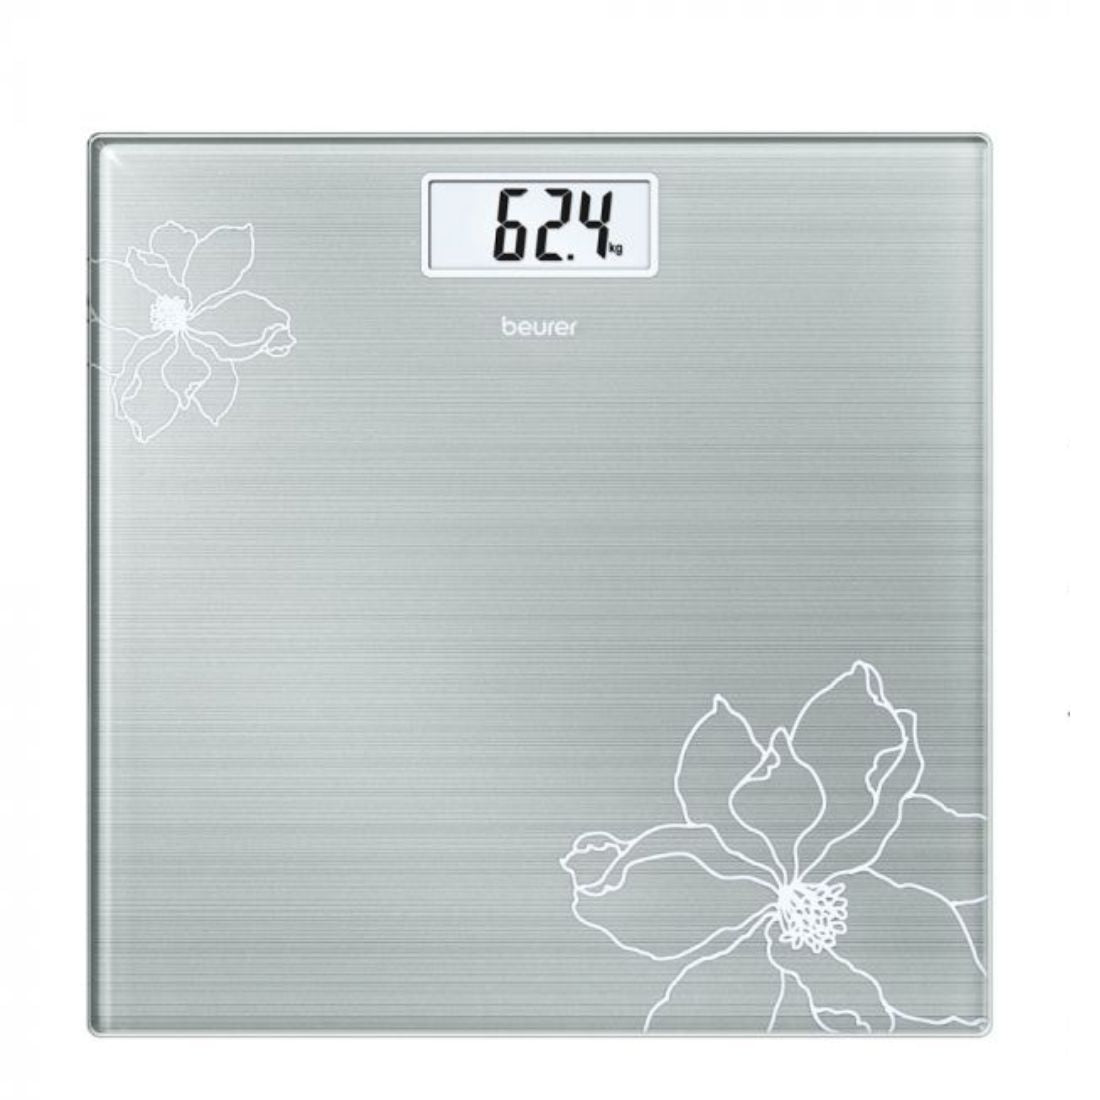 Beurer wellbeing Weight Machine - Glass scale